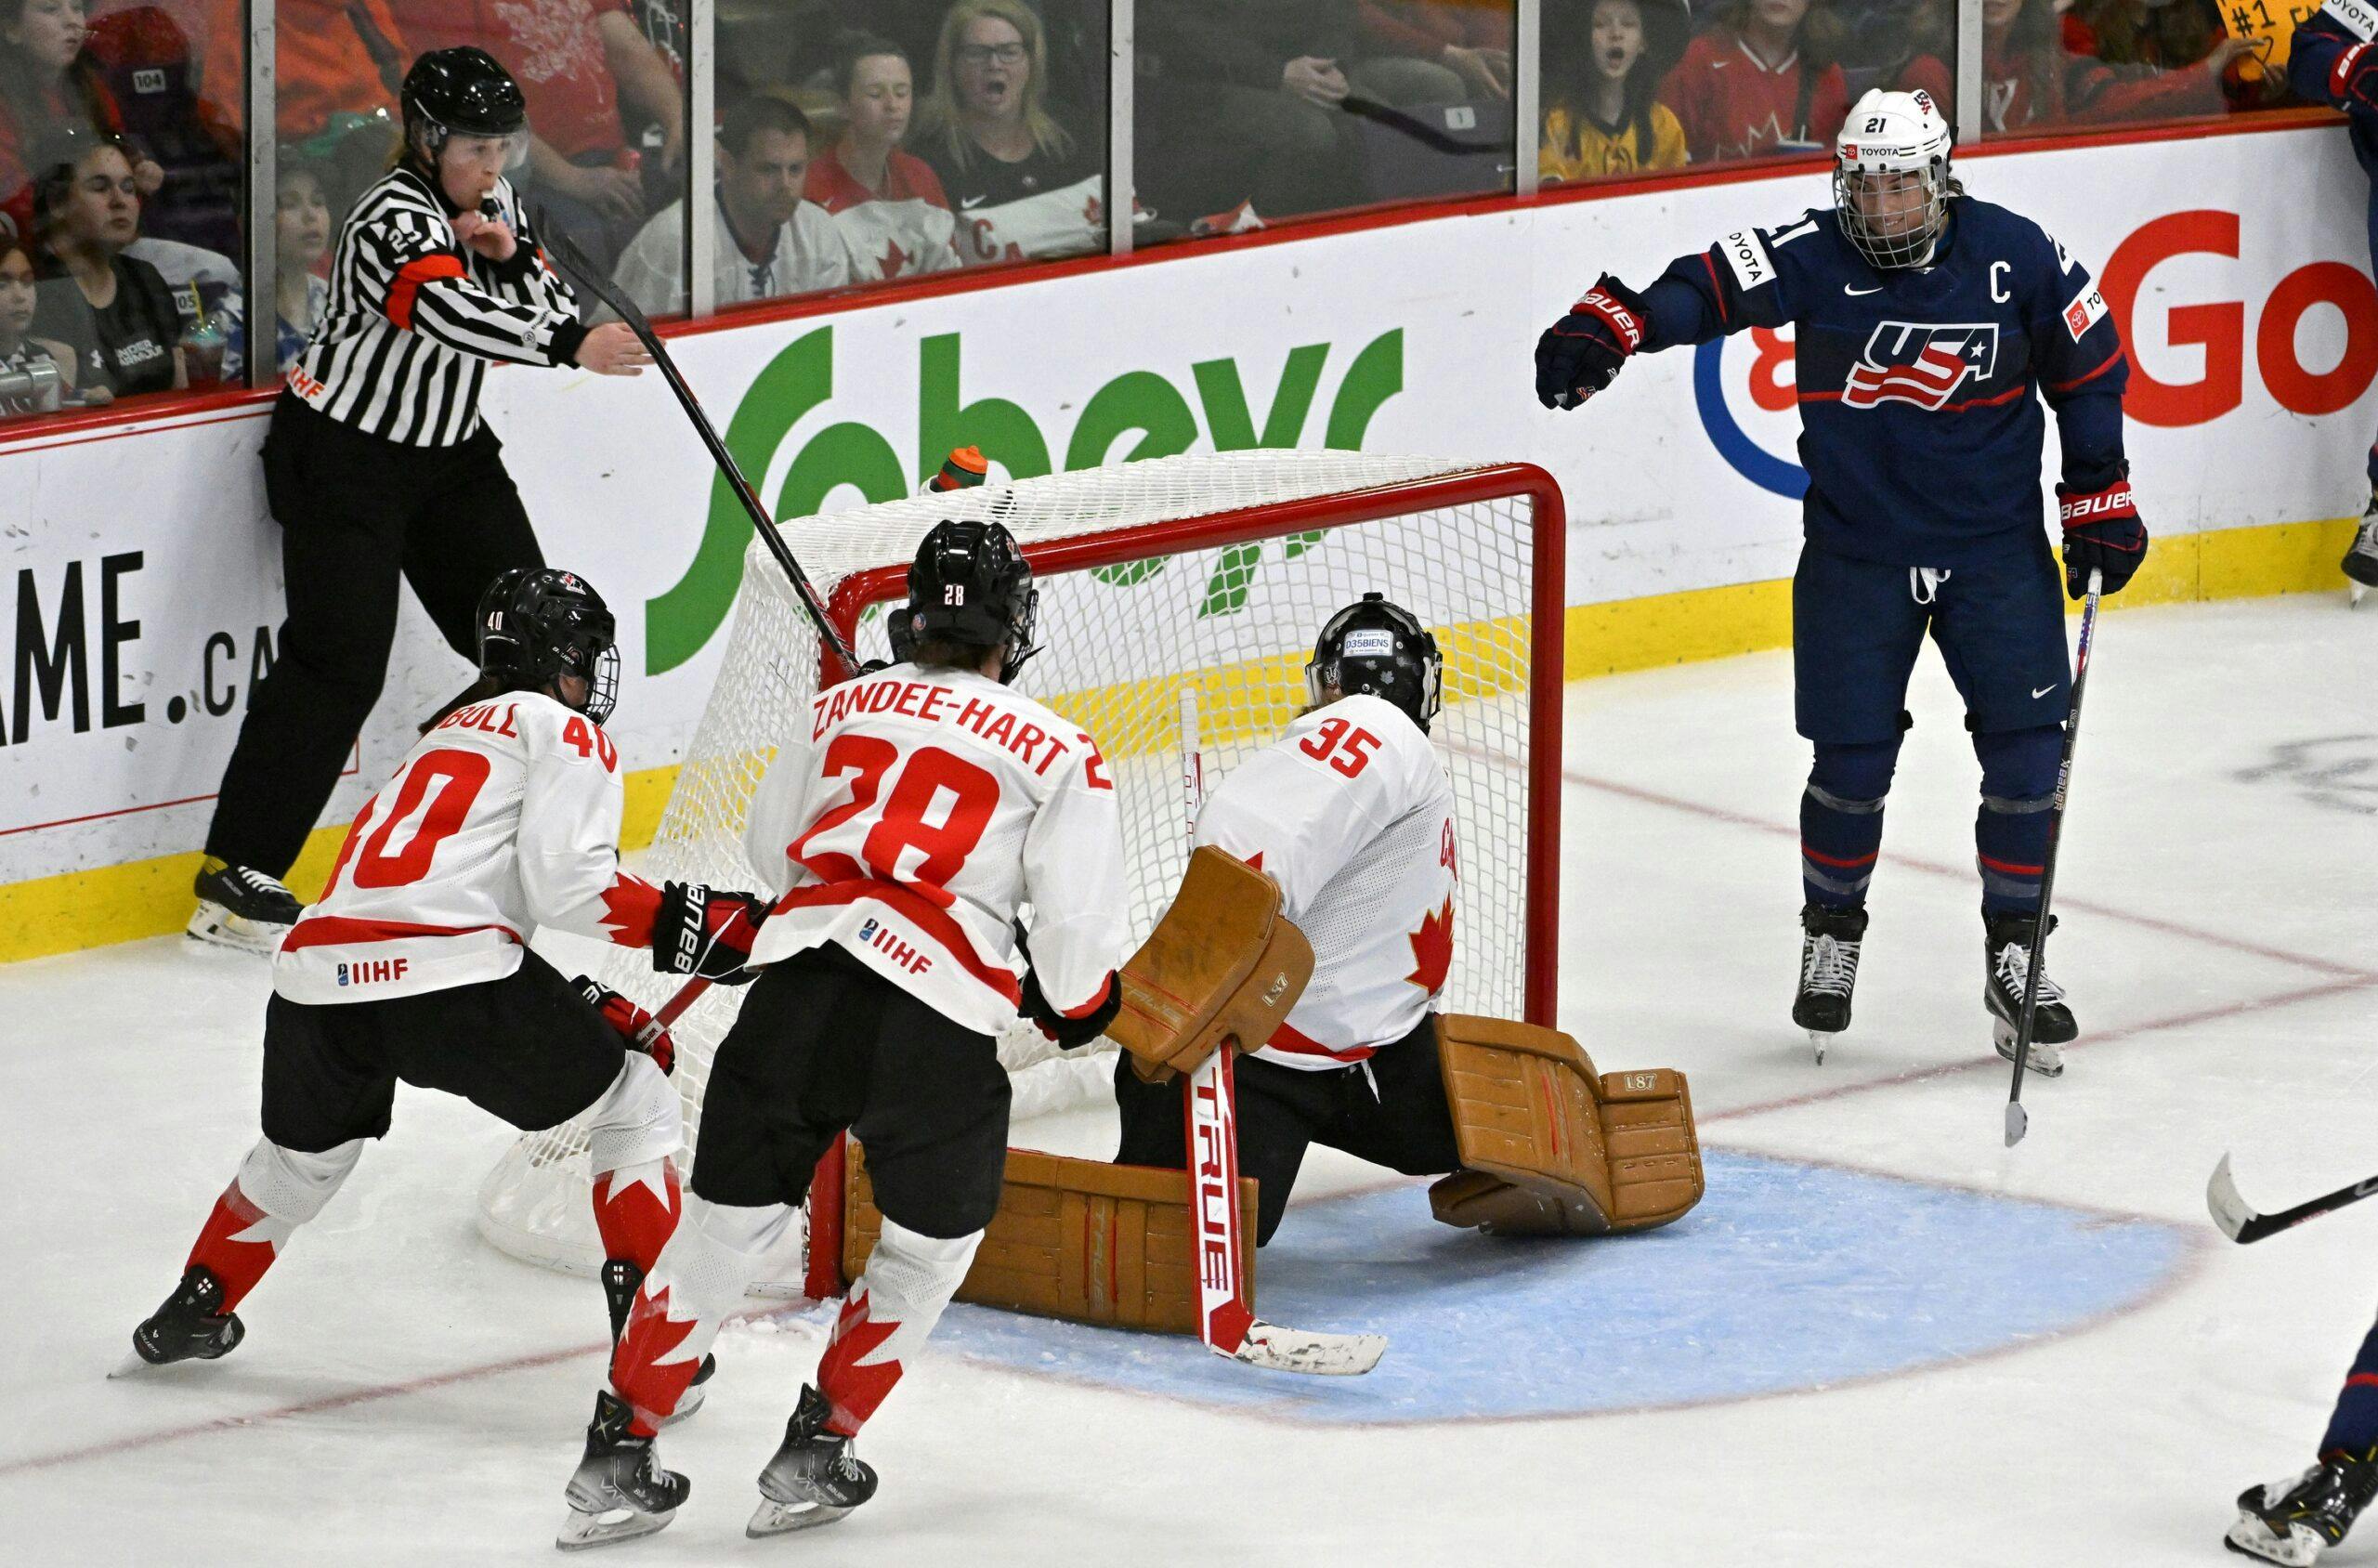 Canada awarded 2023 women's hockey worlds, U.S. to host in '24